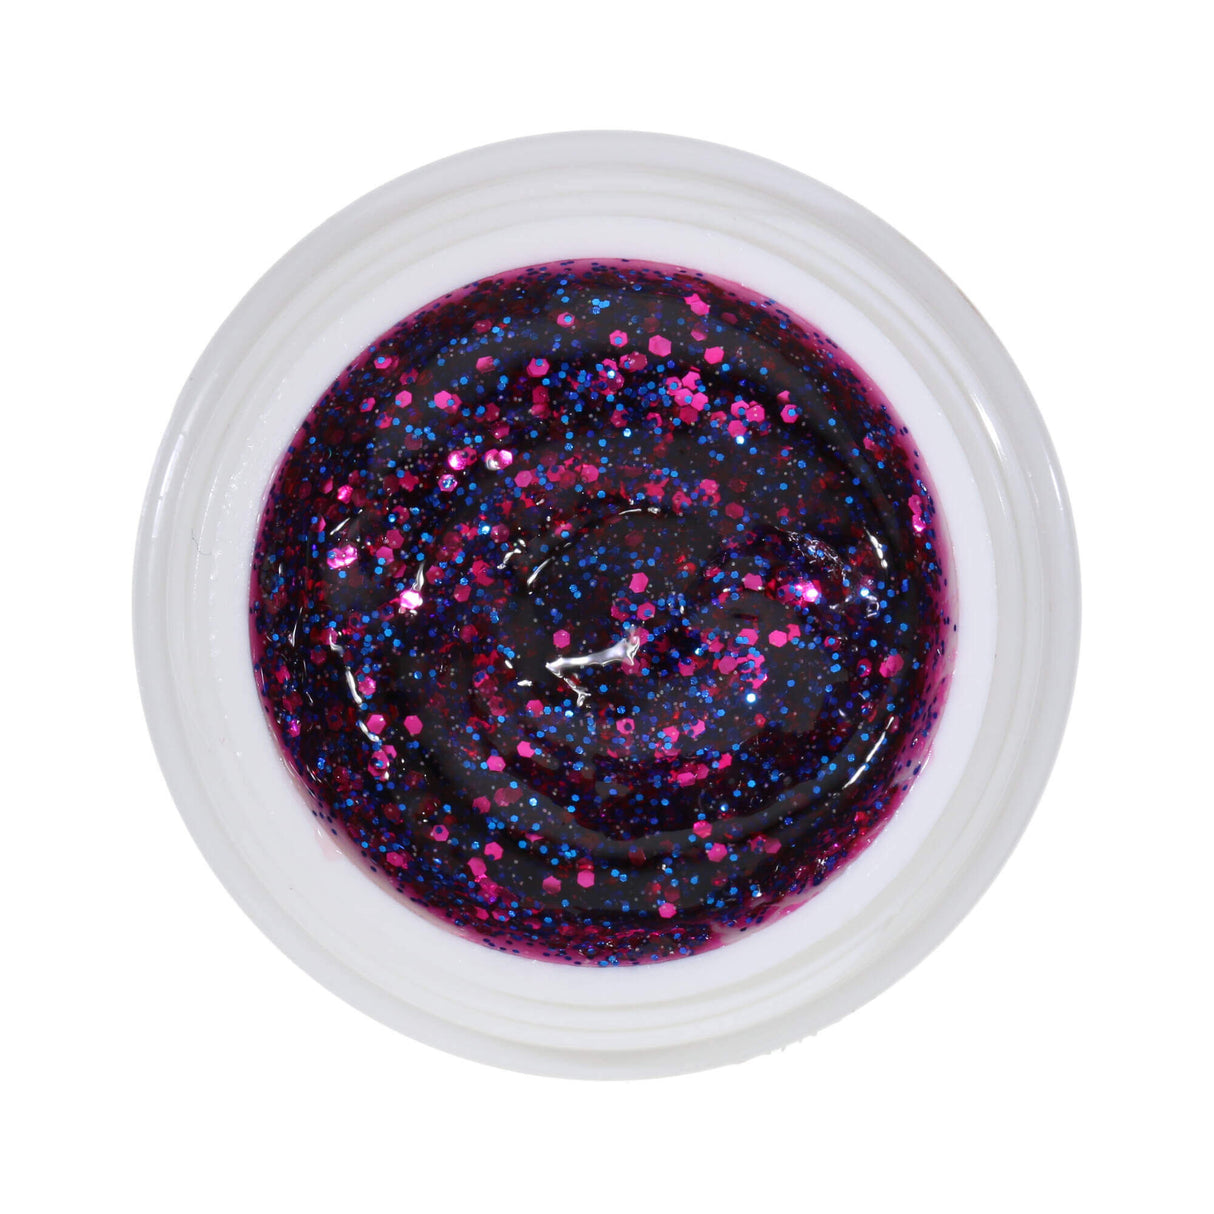 # 270 Premium-GLITTER Color Gel 5ml Pink-colored gel with pink-colored glitter and blue glitter particles